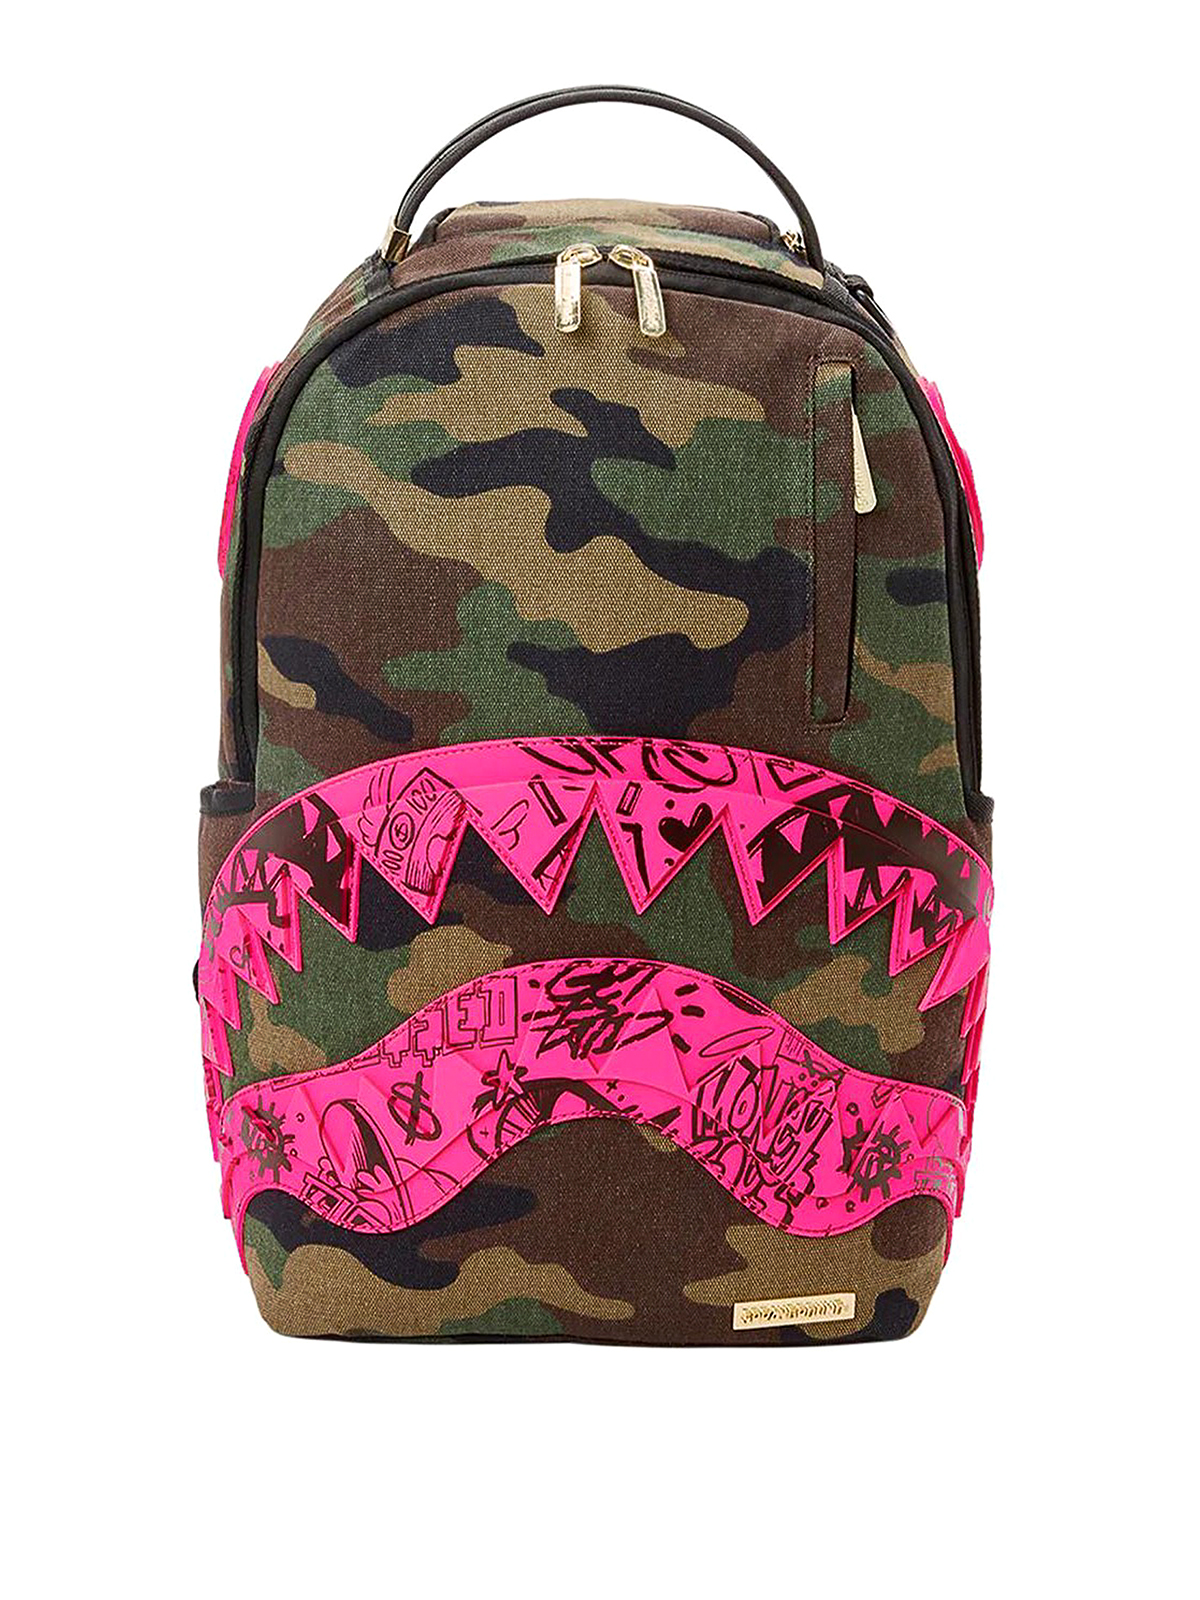 BAPE original shark camo casual bag backpack